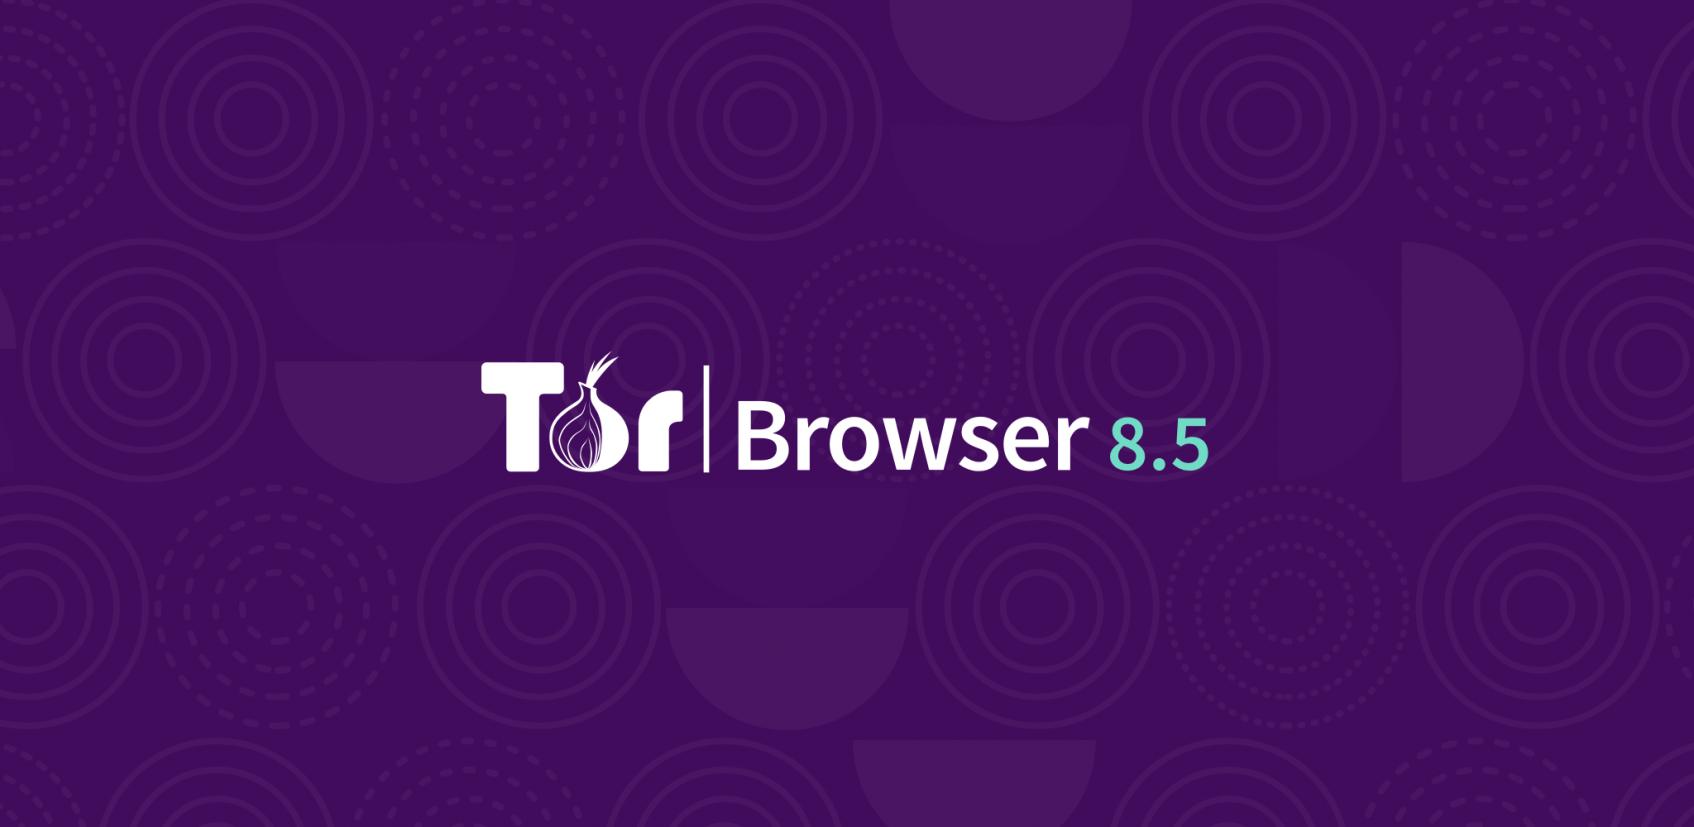 tor browser help gydra